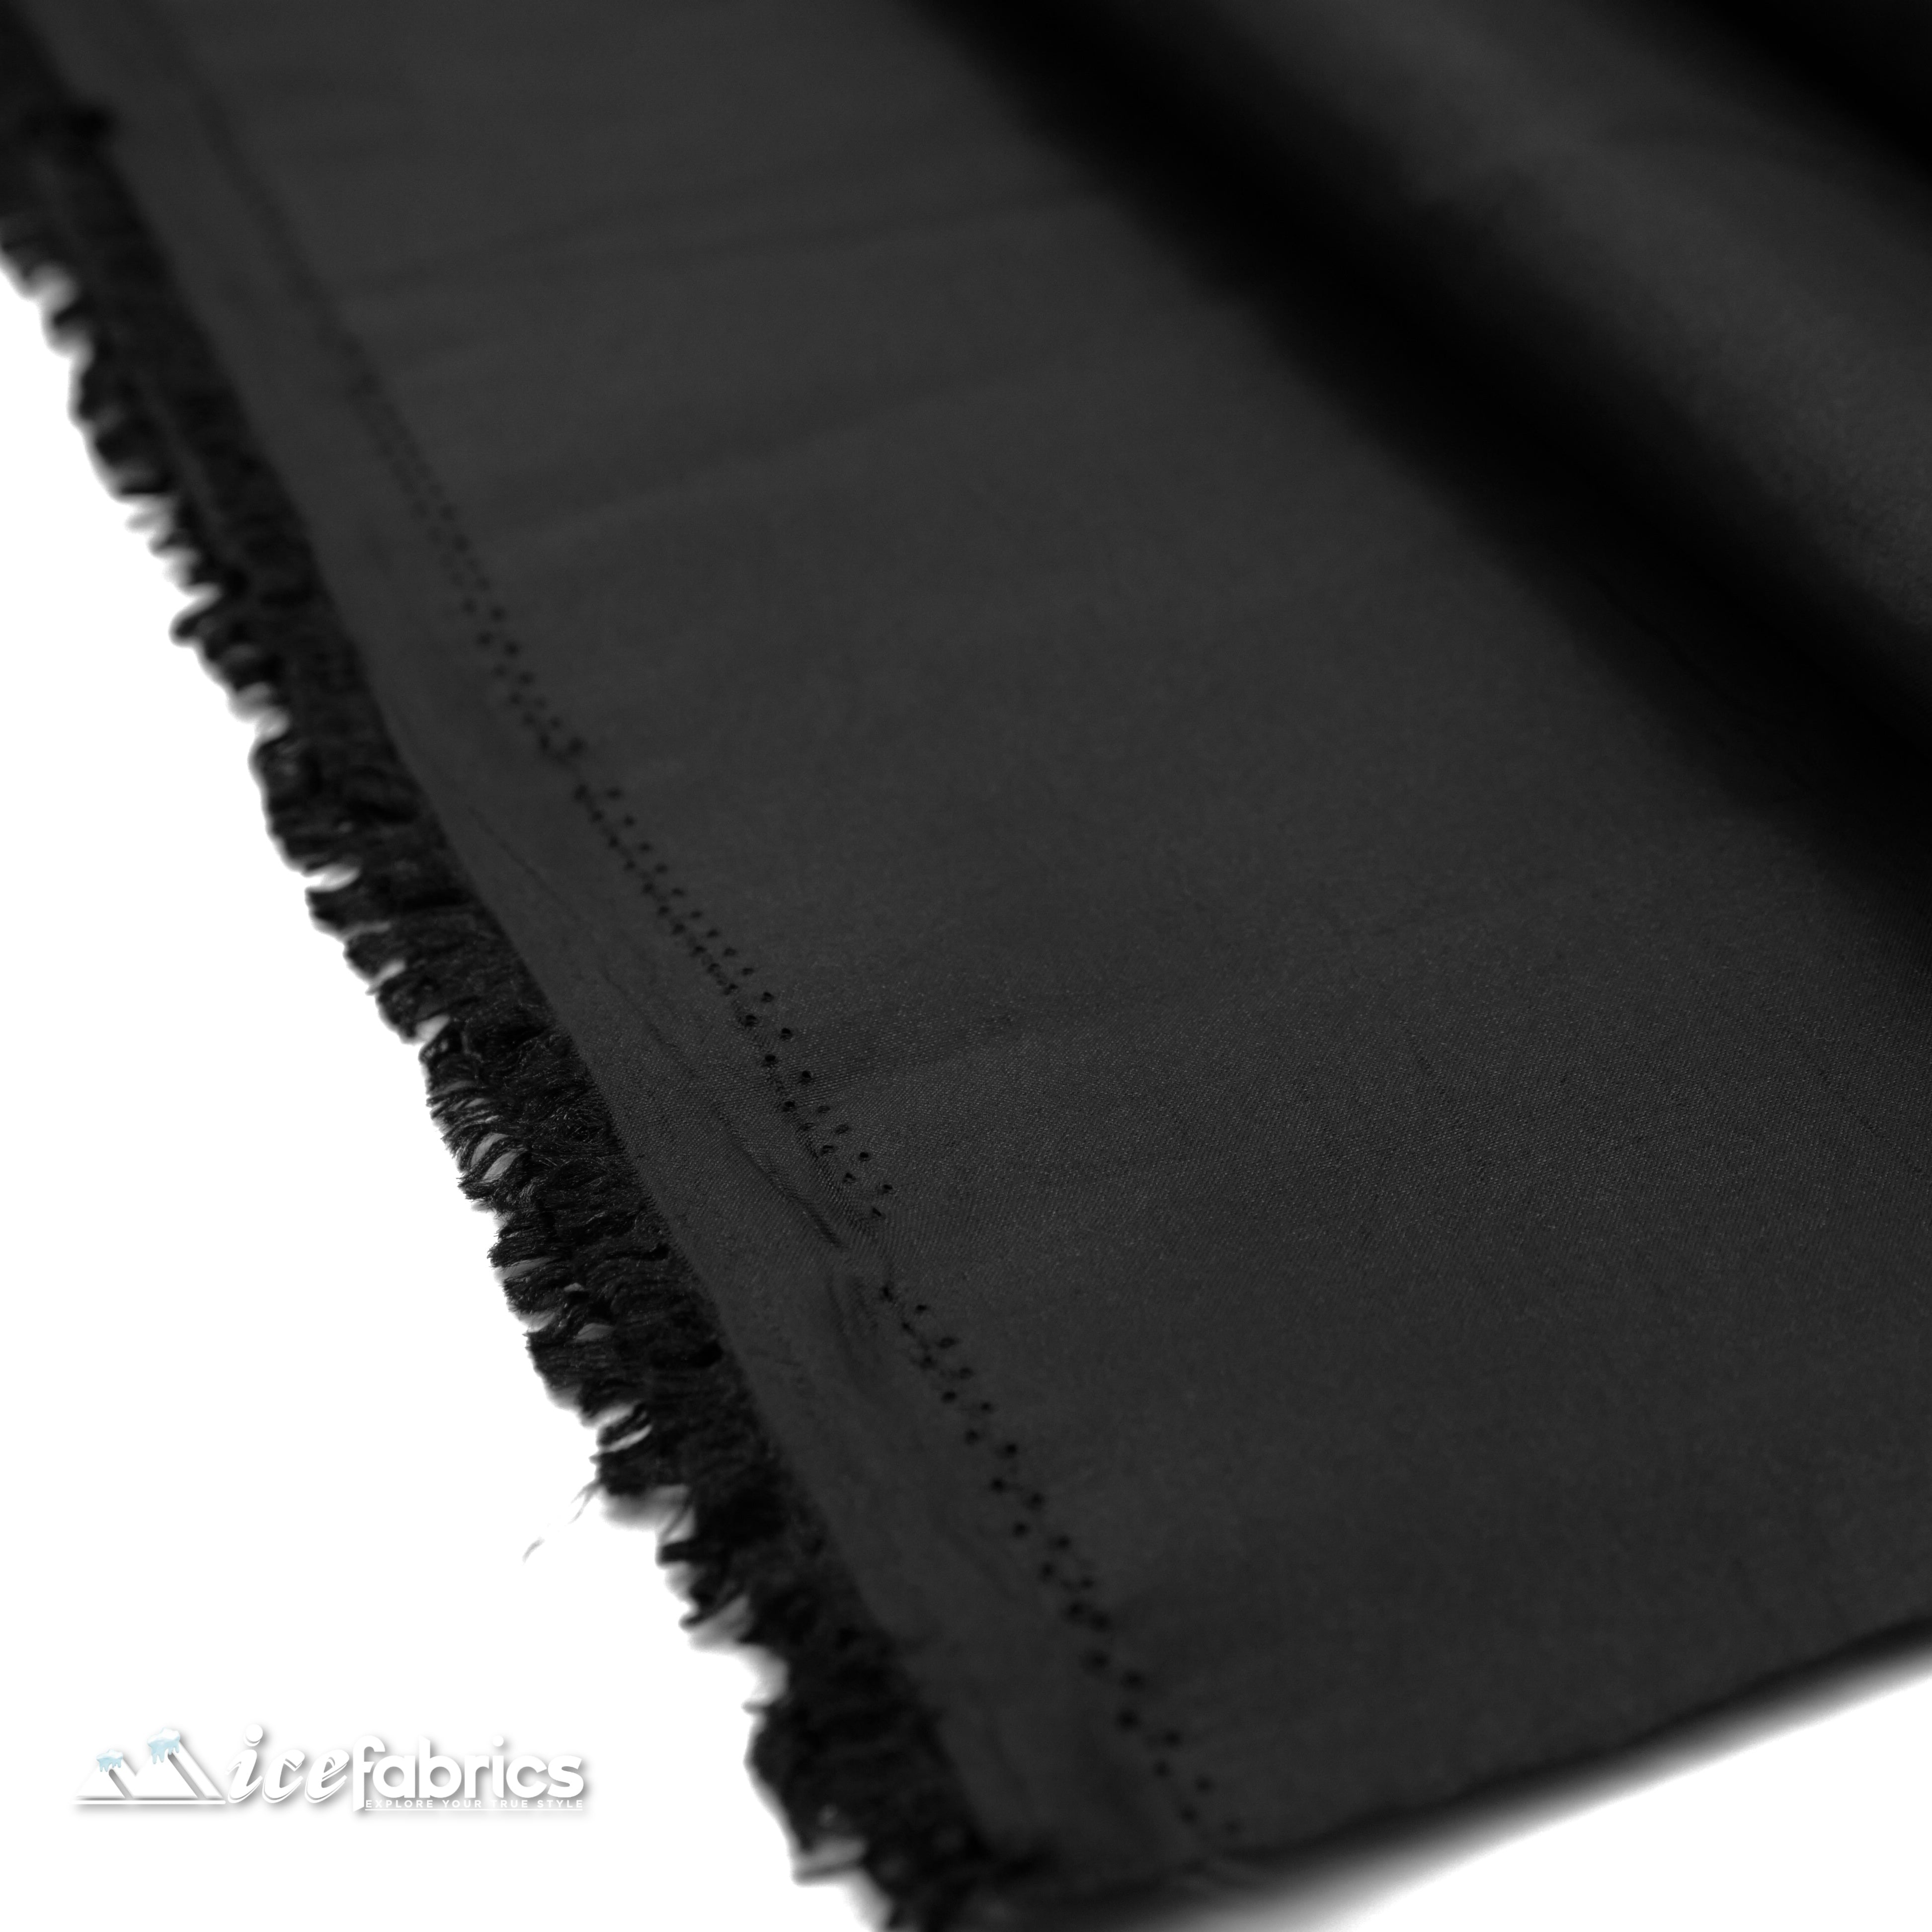 Taffeta Fabric By The Roll (20 yards)Taffeta Wholesale Fabric ICEFABRIC